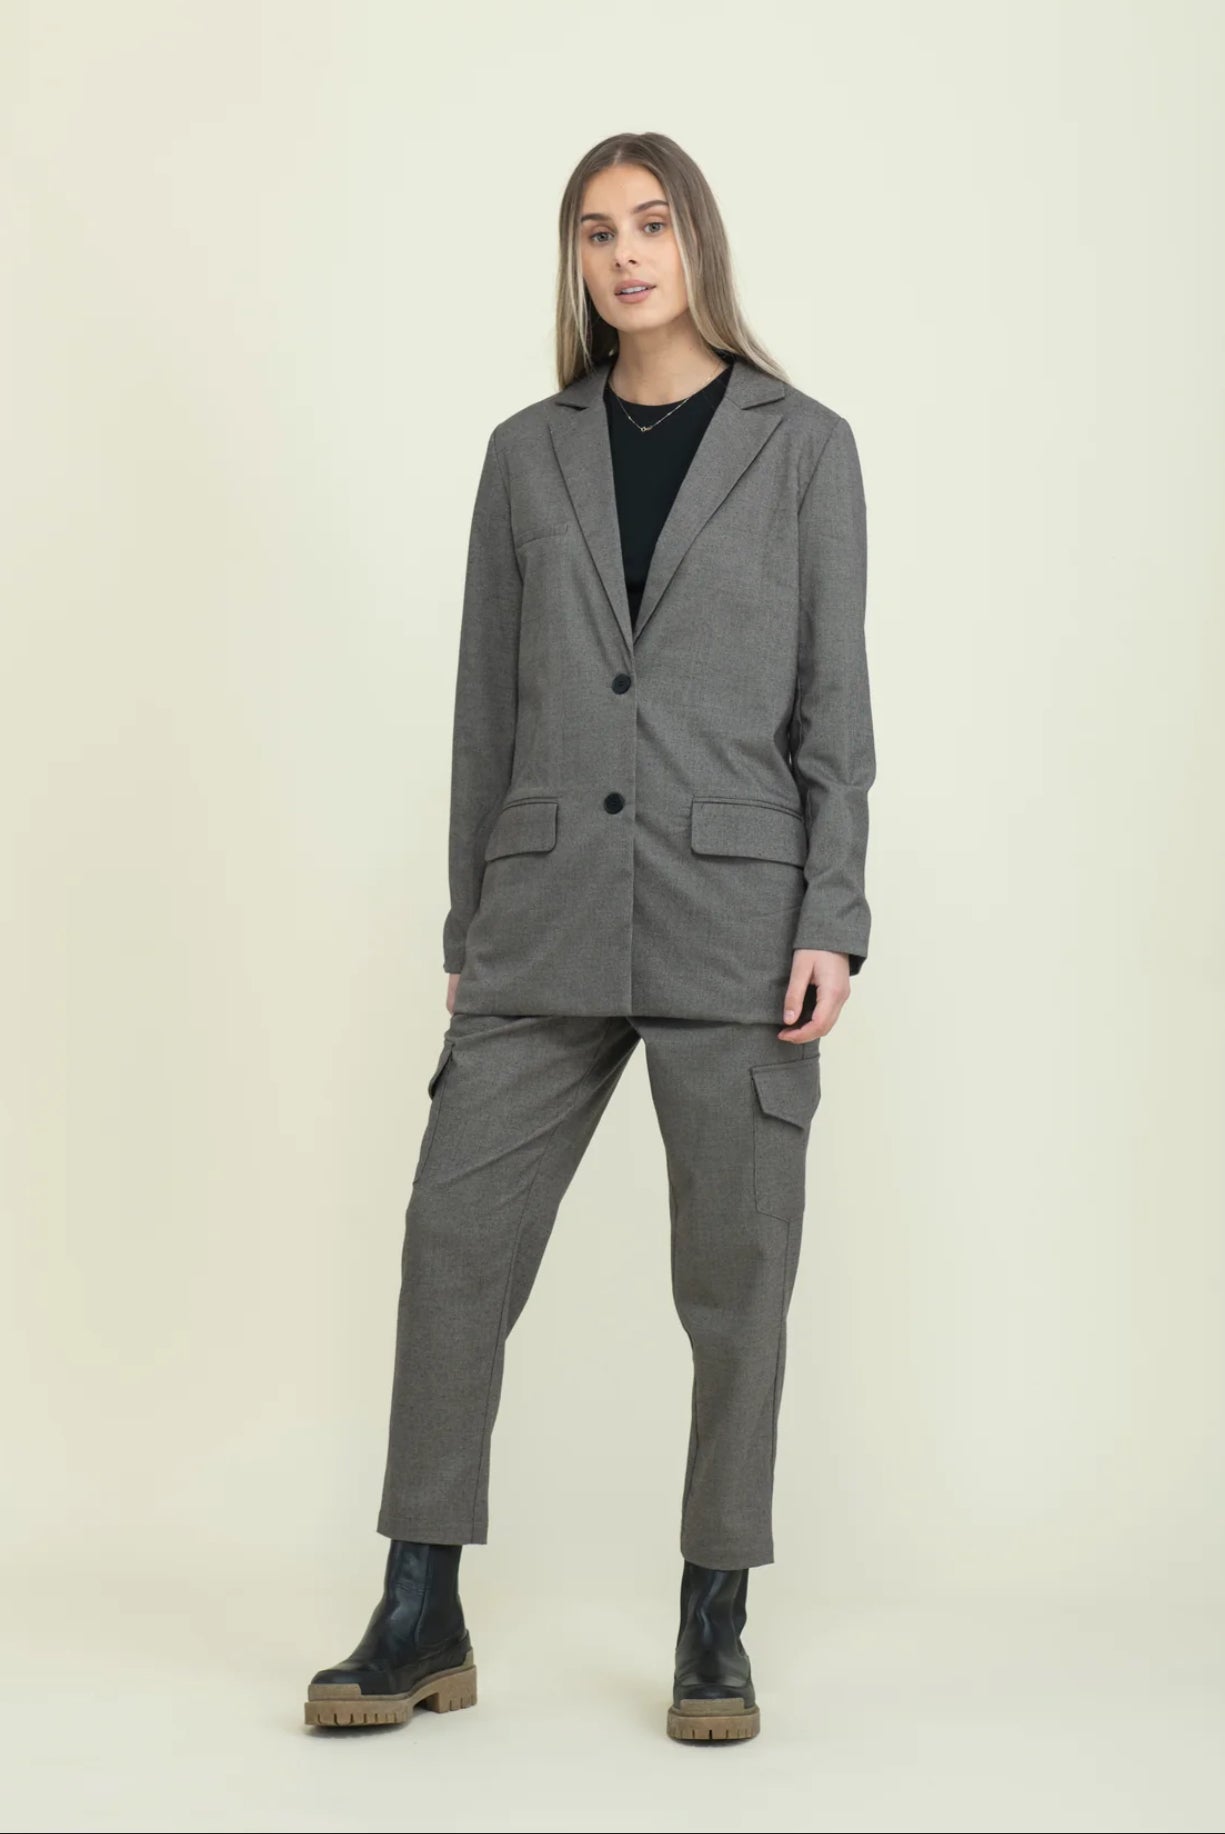 Emma oversized lined blazer by Orb - tweed - Blue Sky Fashions & Lingerie